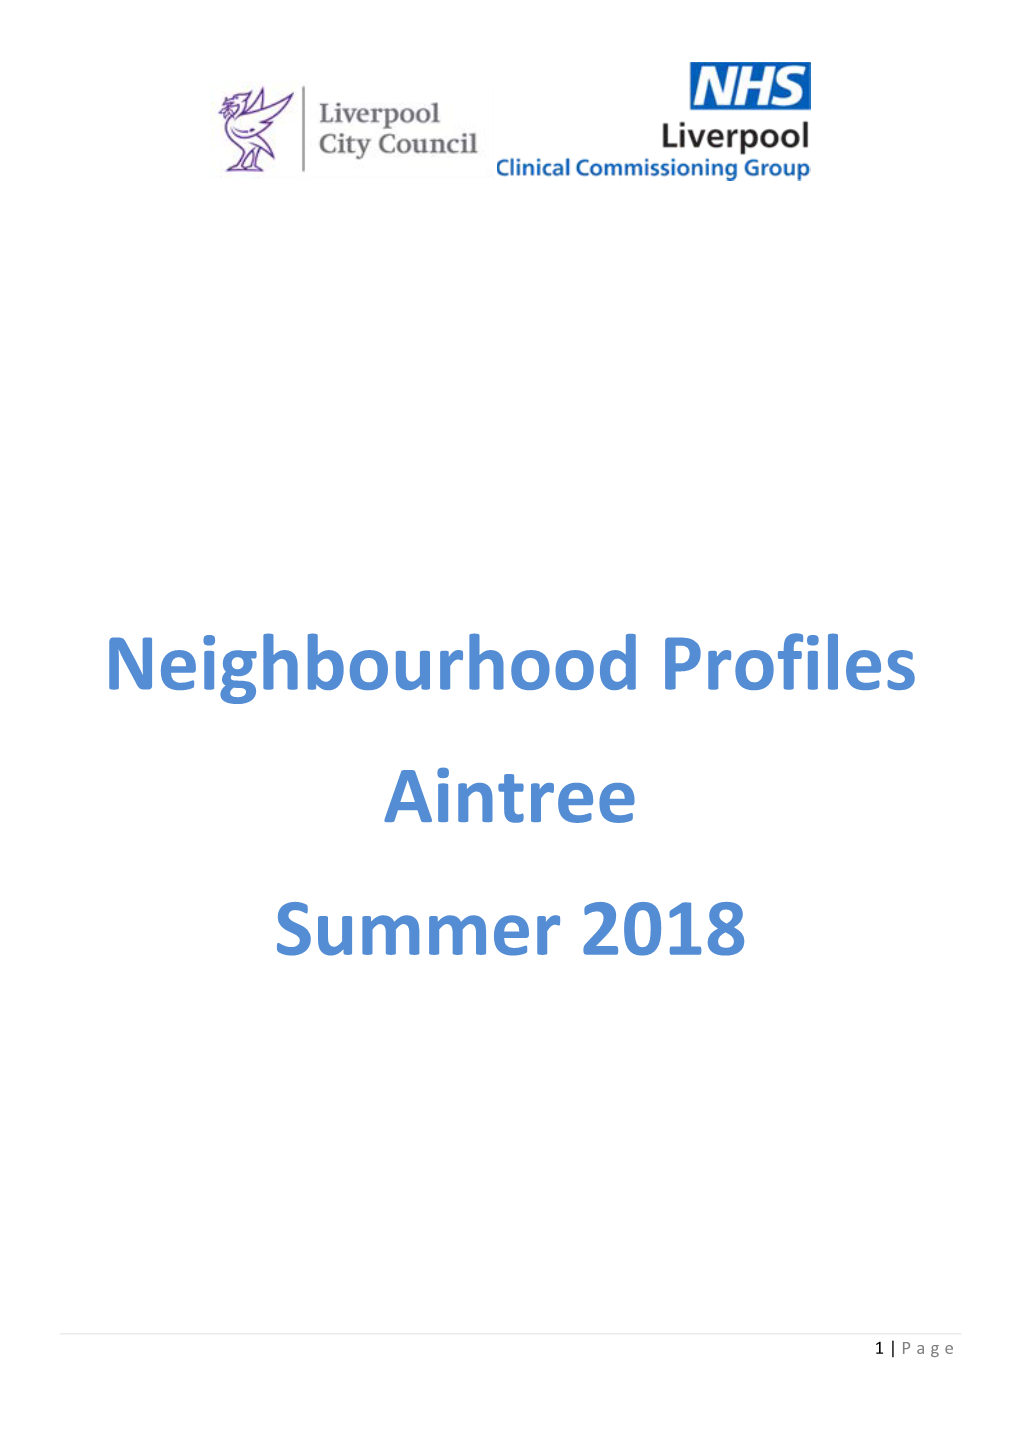 Aintree Summer 2018